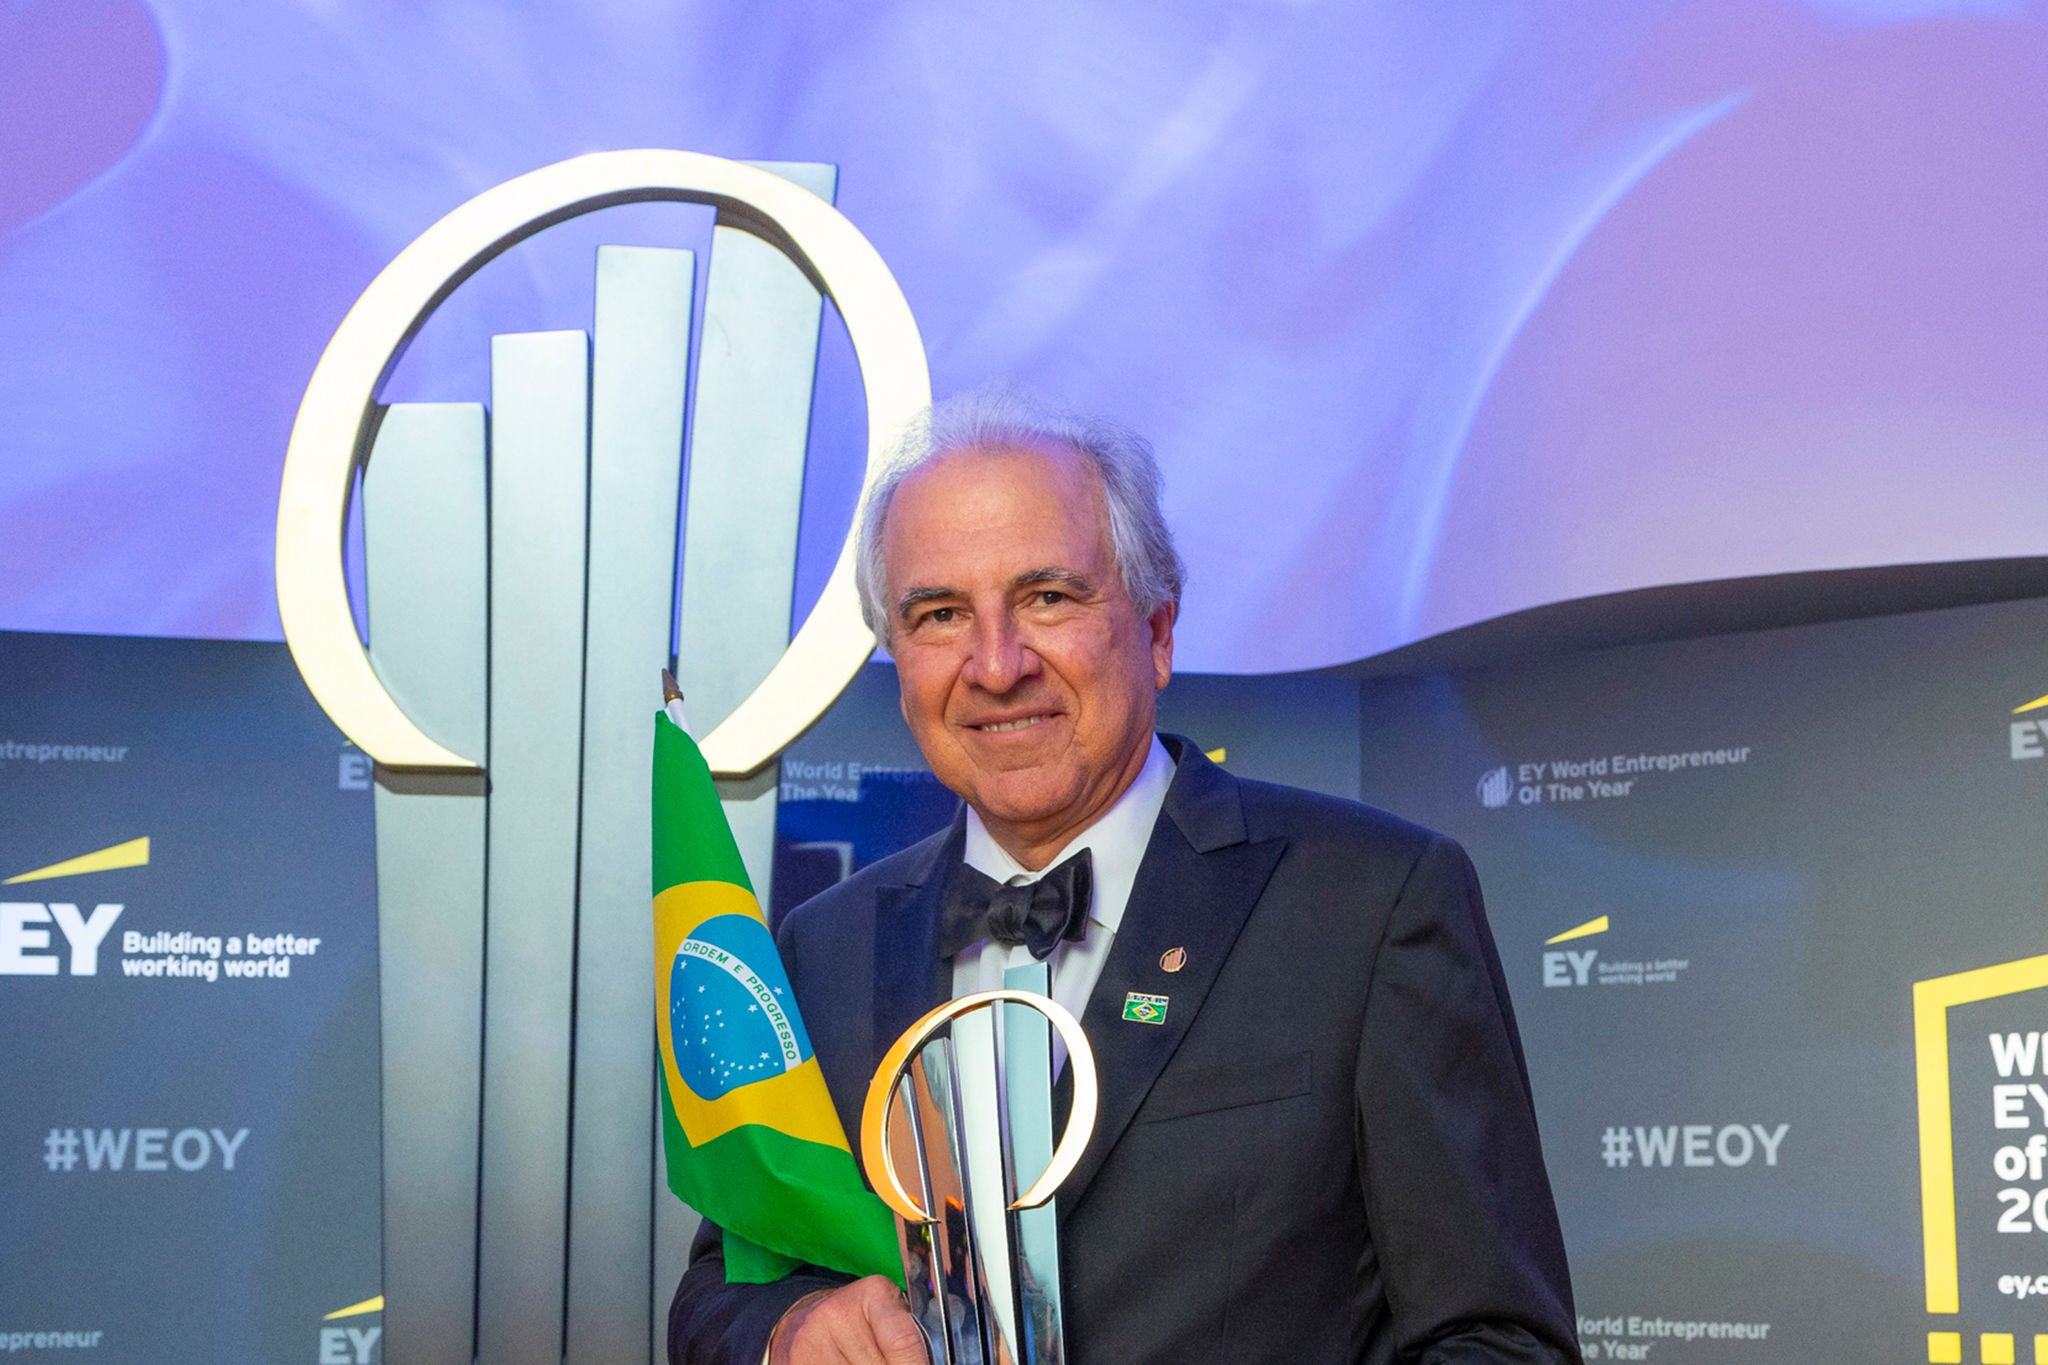 Photo of Rubens Menin holding a trophy